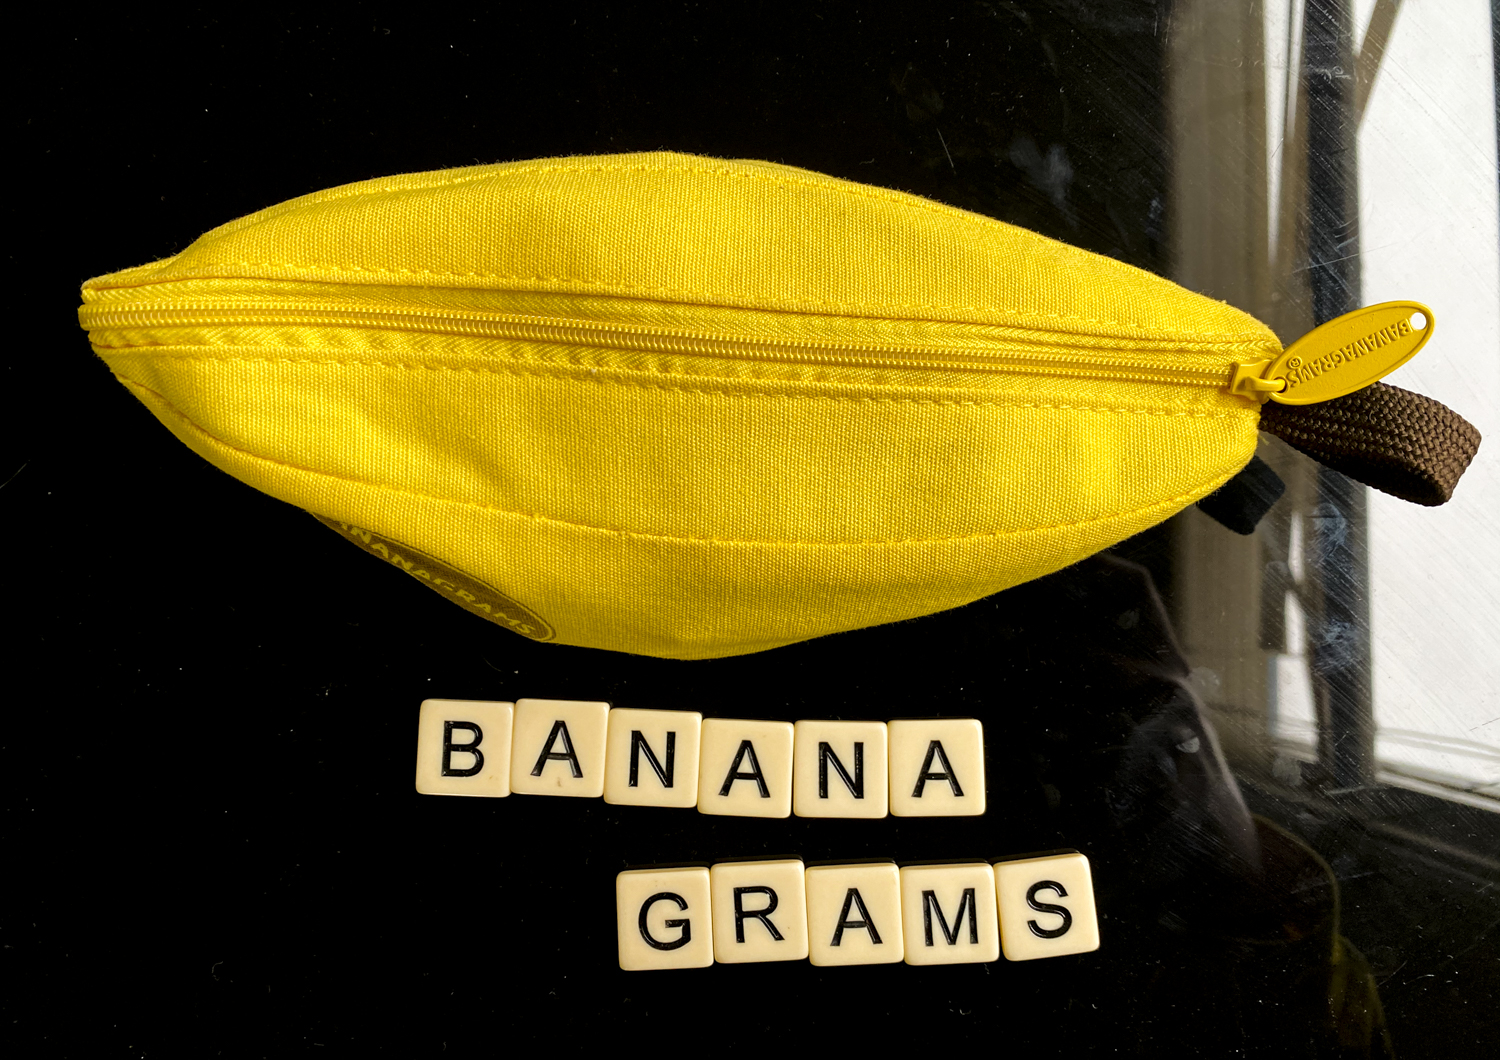 Bananagrams® - Art of Play